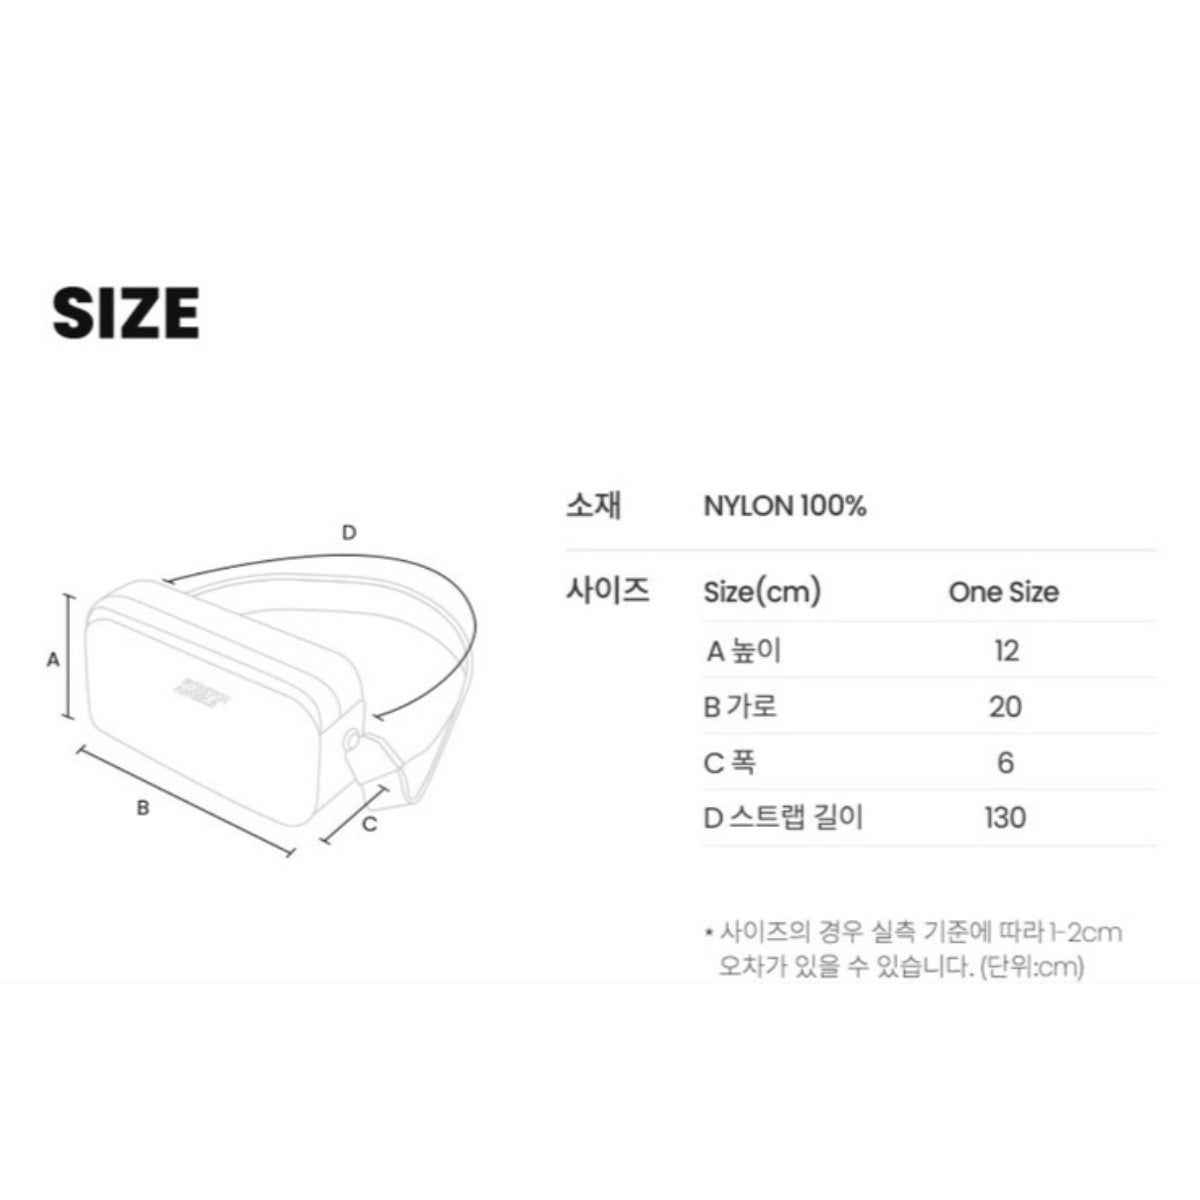 STRETCH ANGELS New Air Panini Bag Black Messenger Shoulder Bag / From Seoul, South Korea